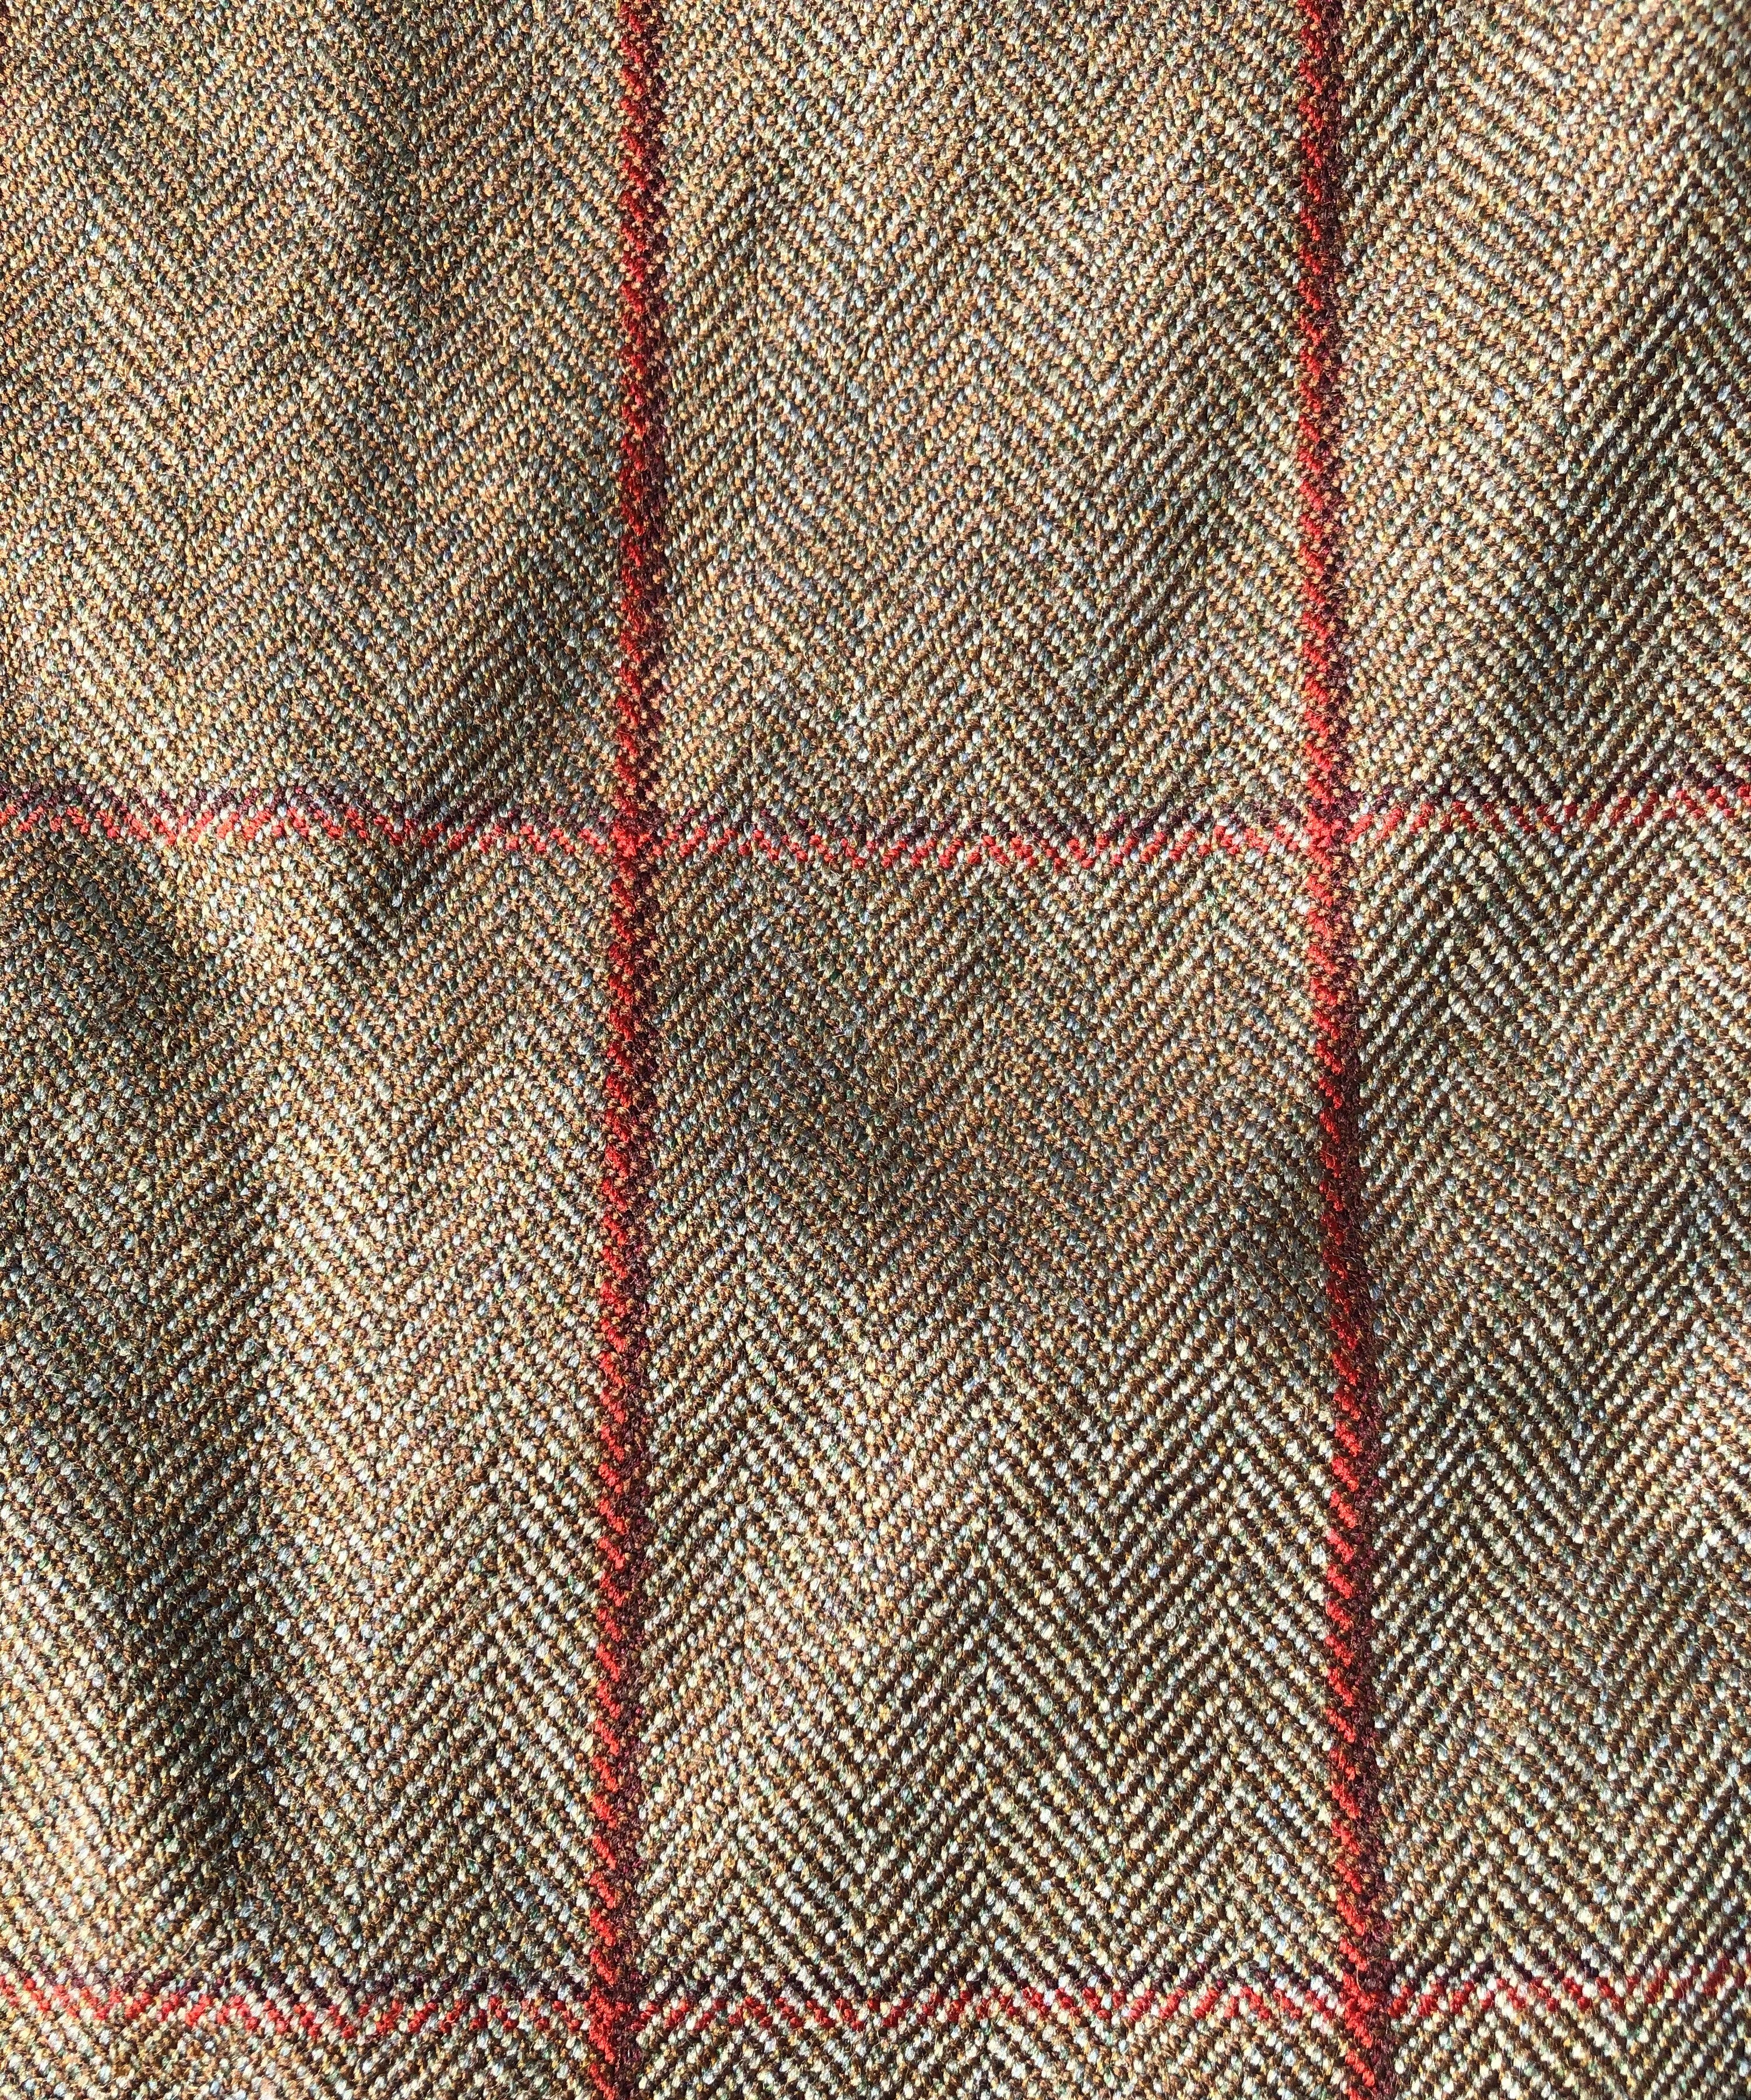 Ladies Tweed Poncho Cape Wrap 2-Tone Satin Lining & detachable Faux Fur Collar-Red/Brown